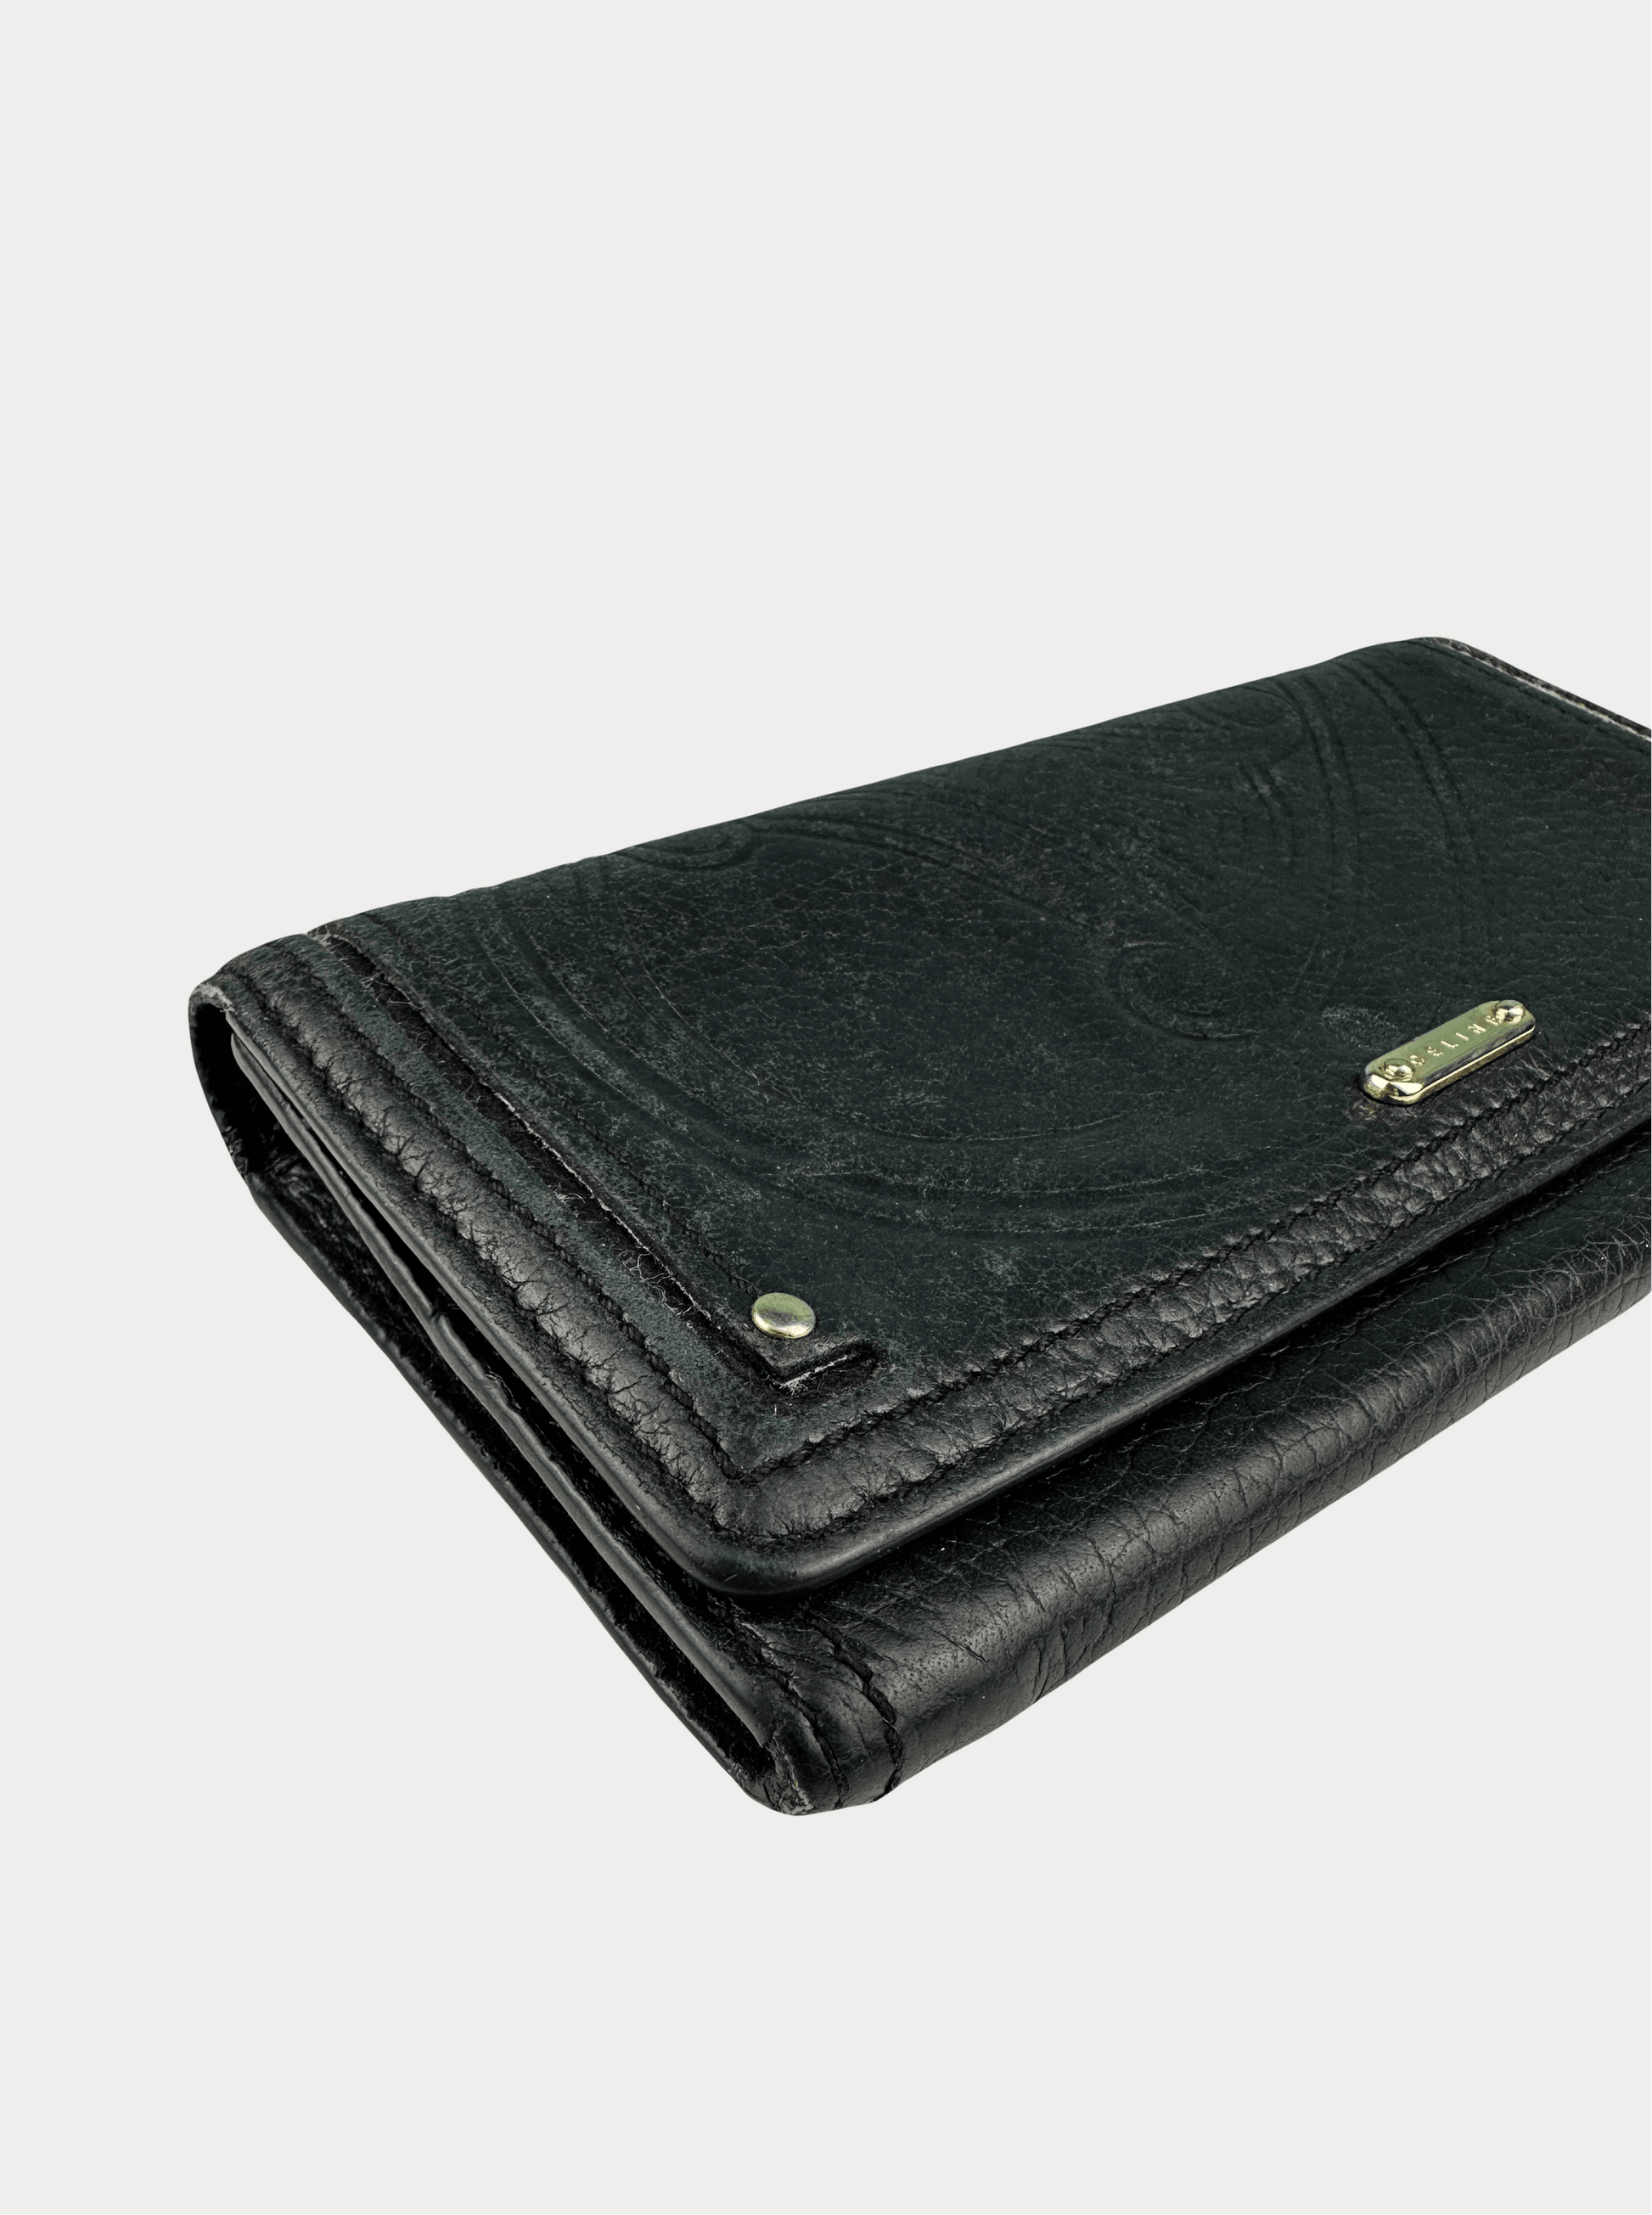 Black Leather Multi Compartment Purse Wallet - Zage Vintage